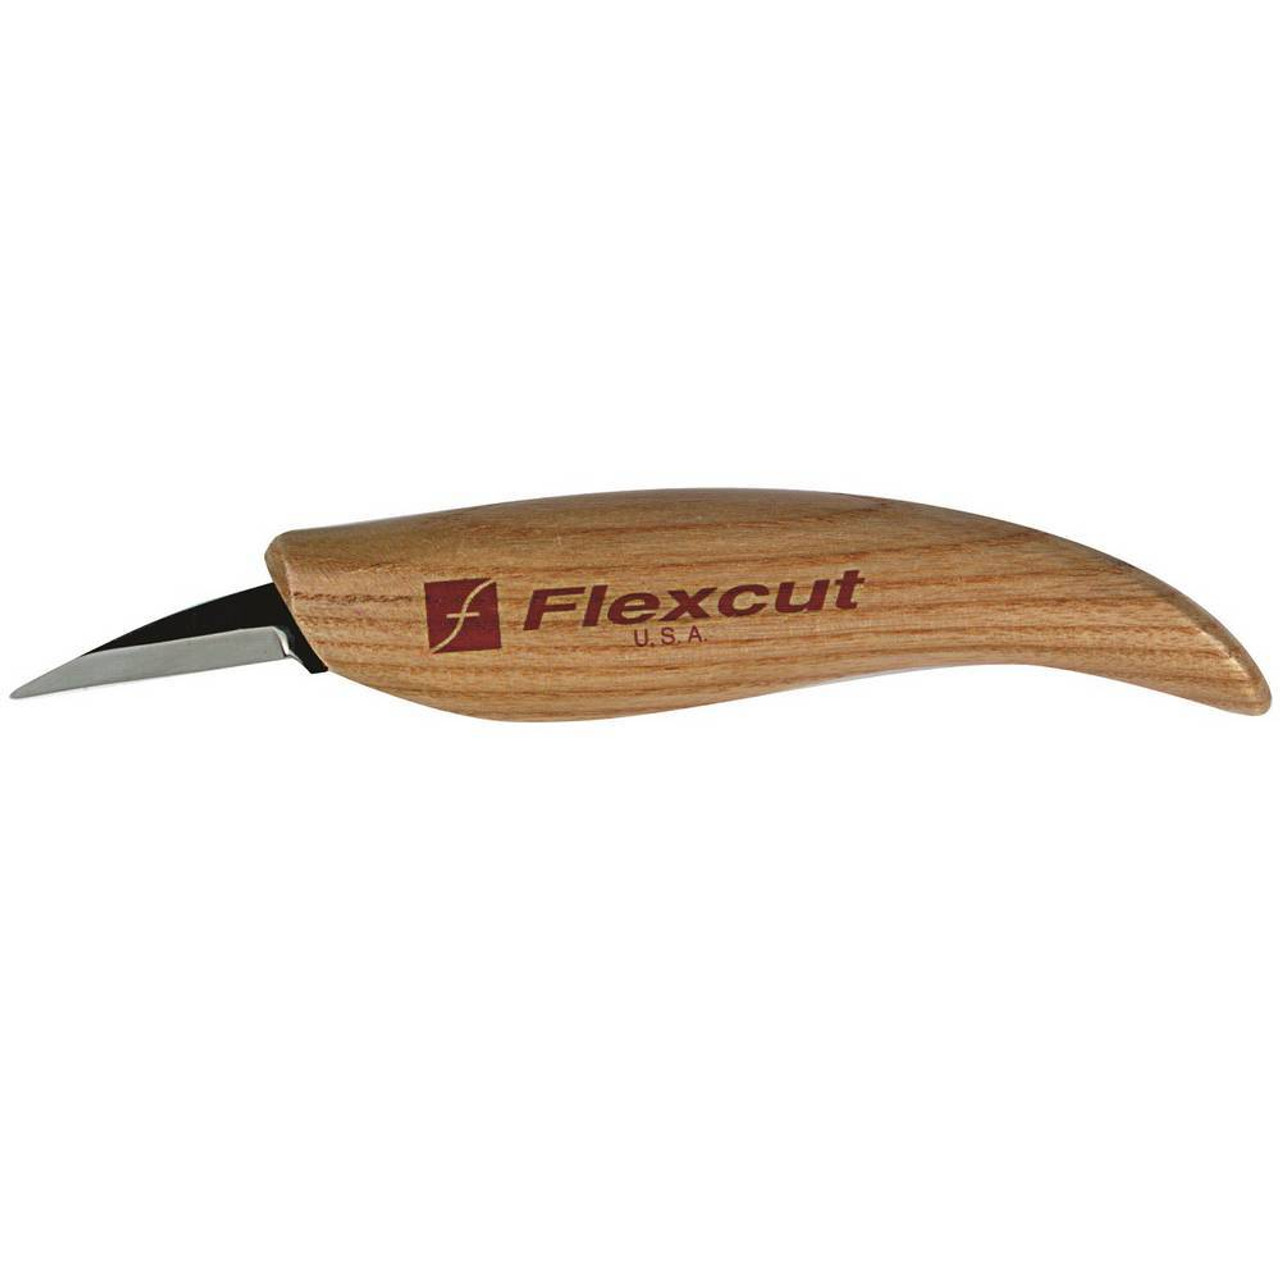 KCT 3/4 Mini Detail Wood Carving Knife Large